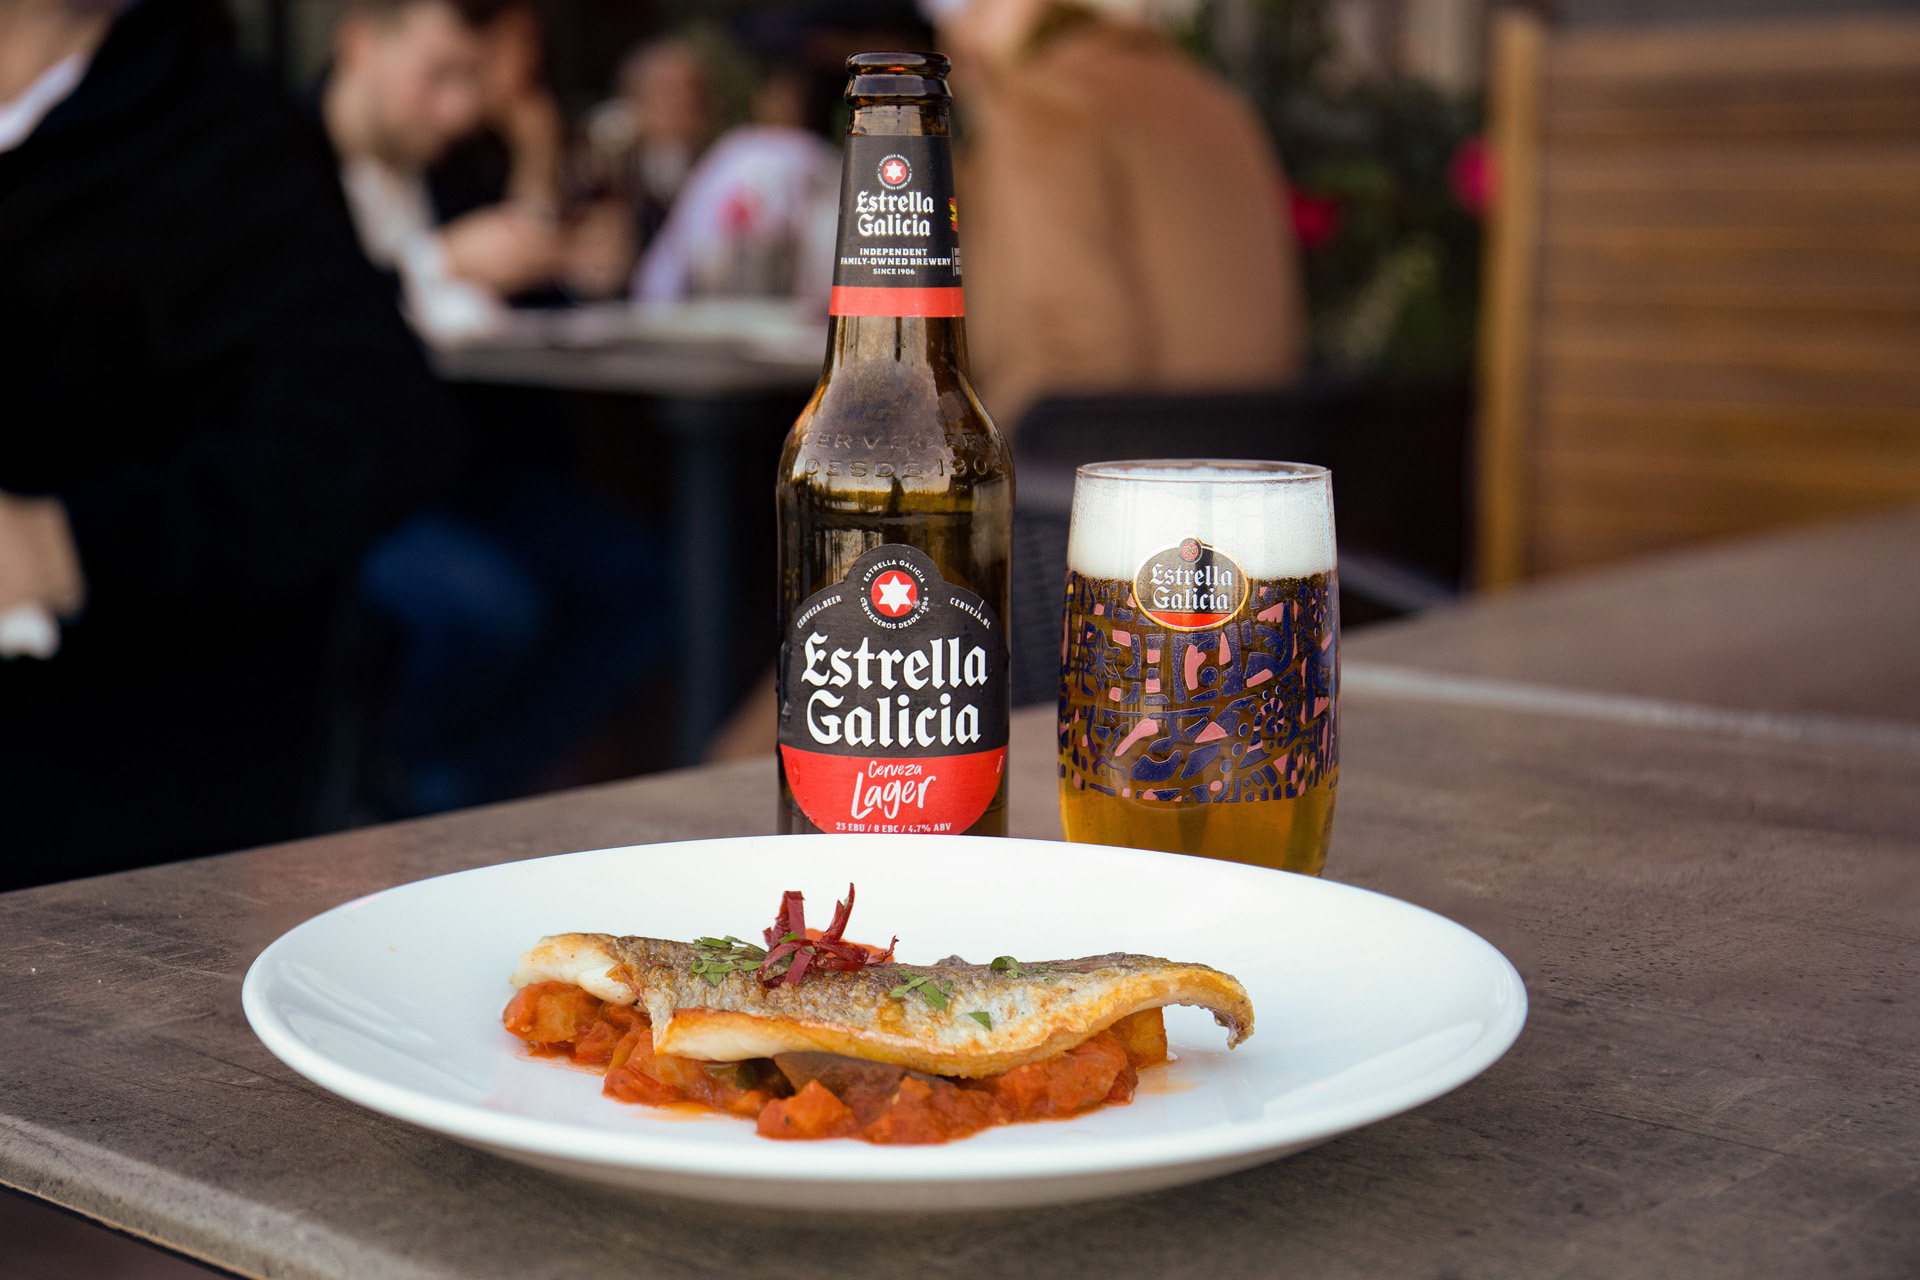 a fish dish with an Estrella Galicia beer